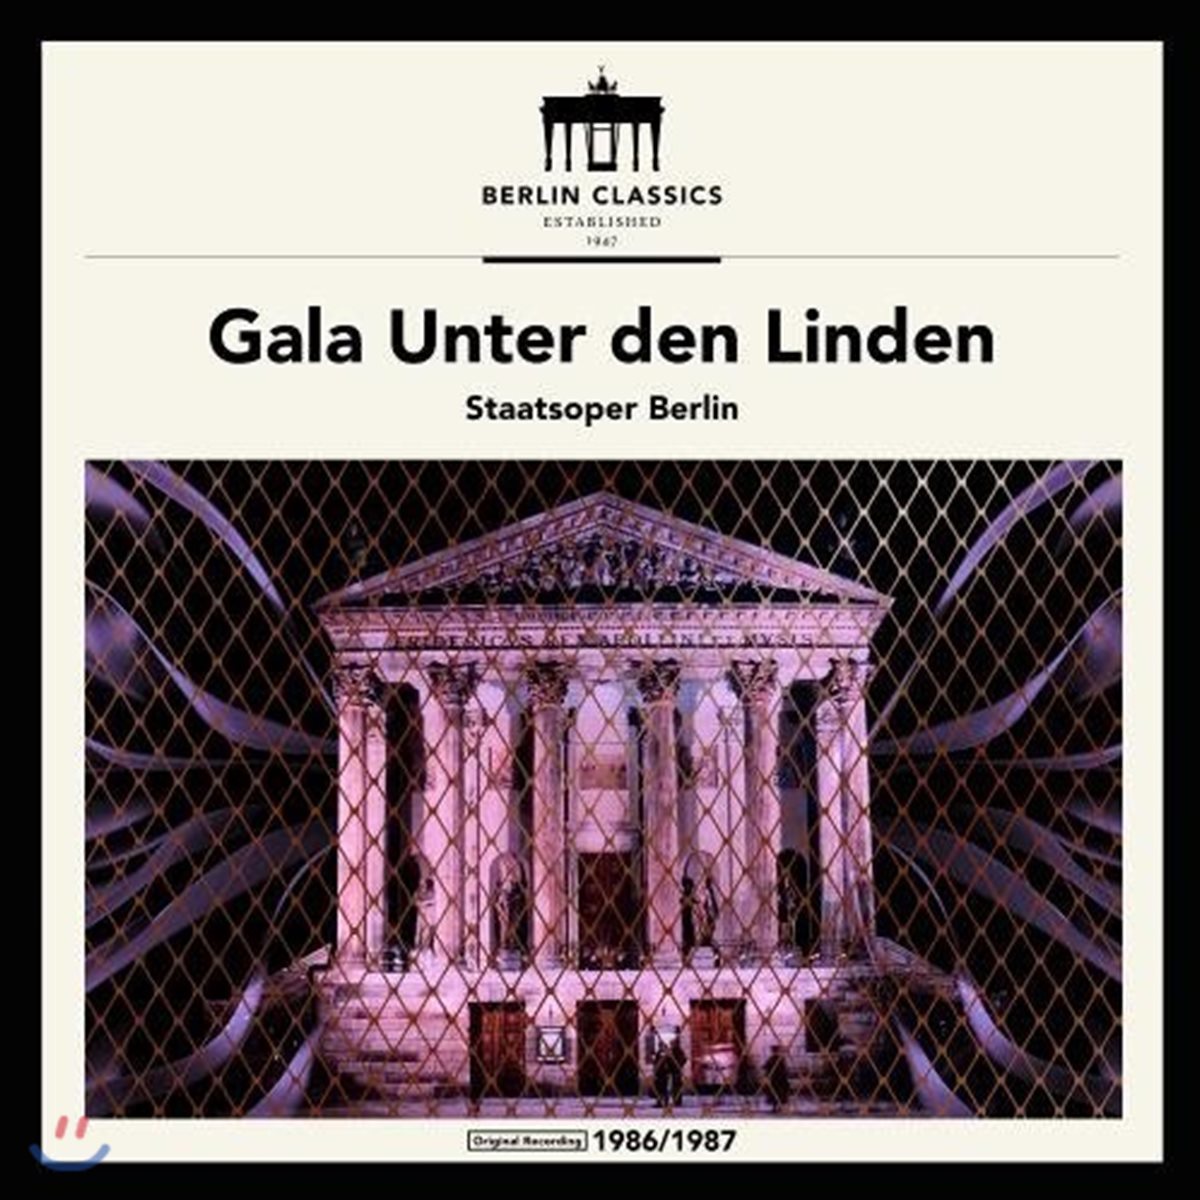 Staatskapelle Berlin 모차르트, 베토벤, 바그너, 베버, 슈트라우스의 오페라 하이라이트 (Gala Unter den Linden)